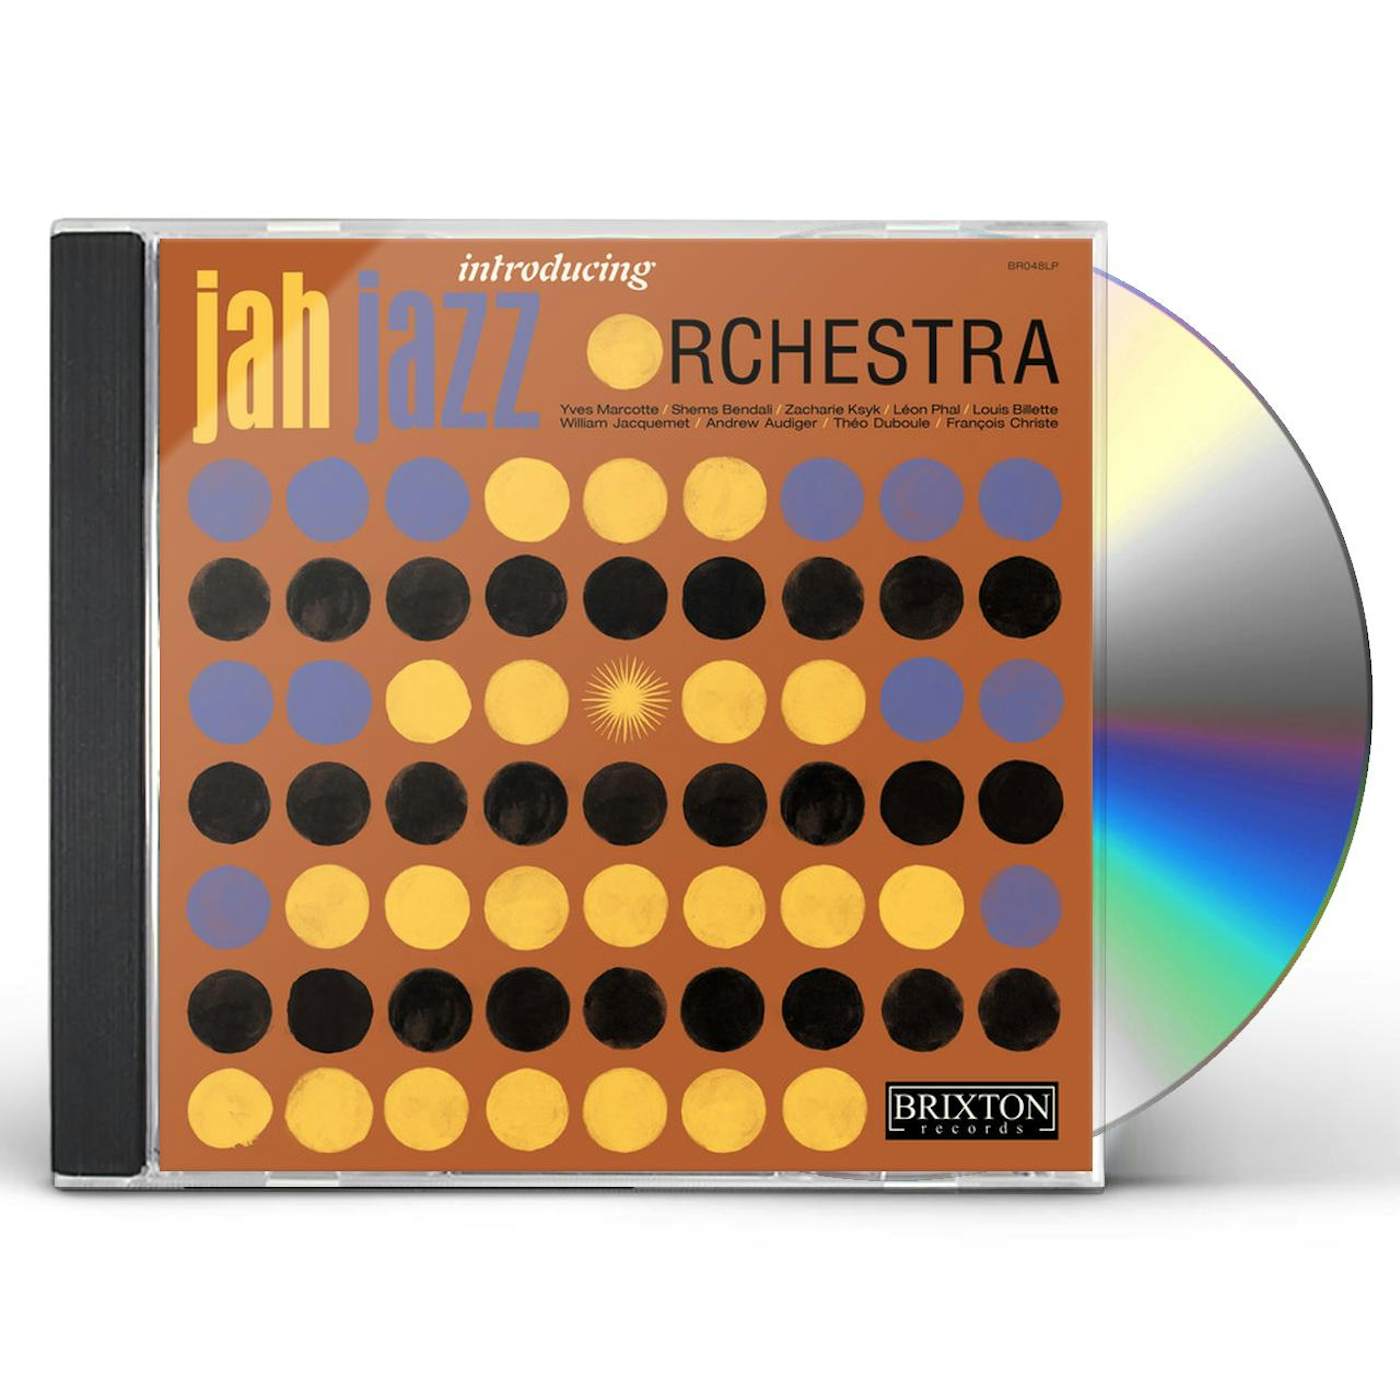 INTRODUCING JAH JAZZ ORCHESTRA CD